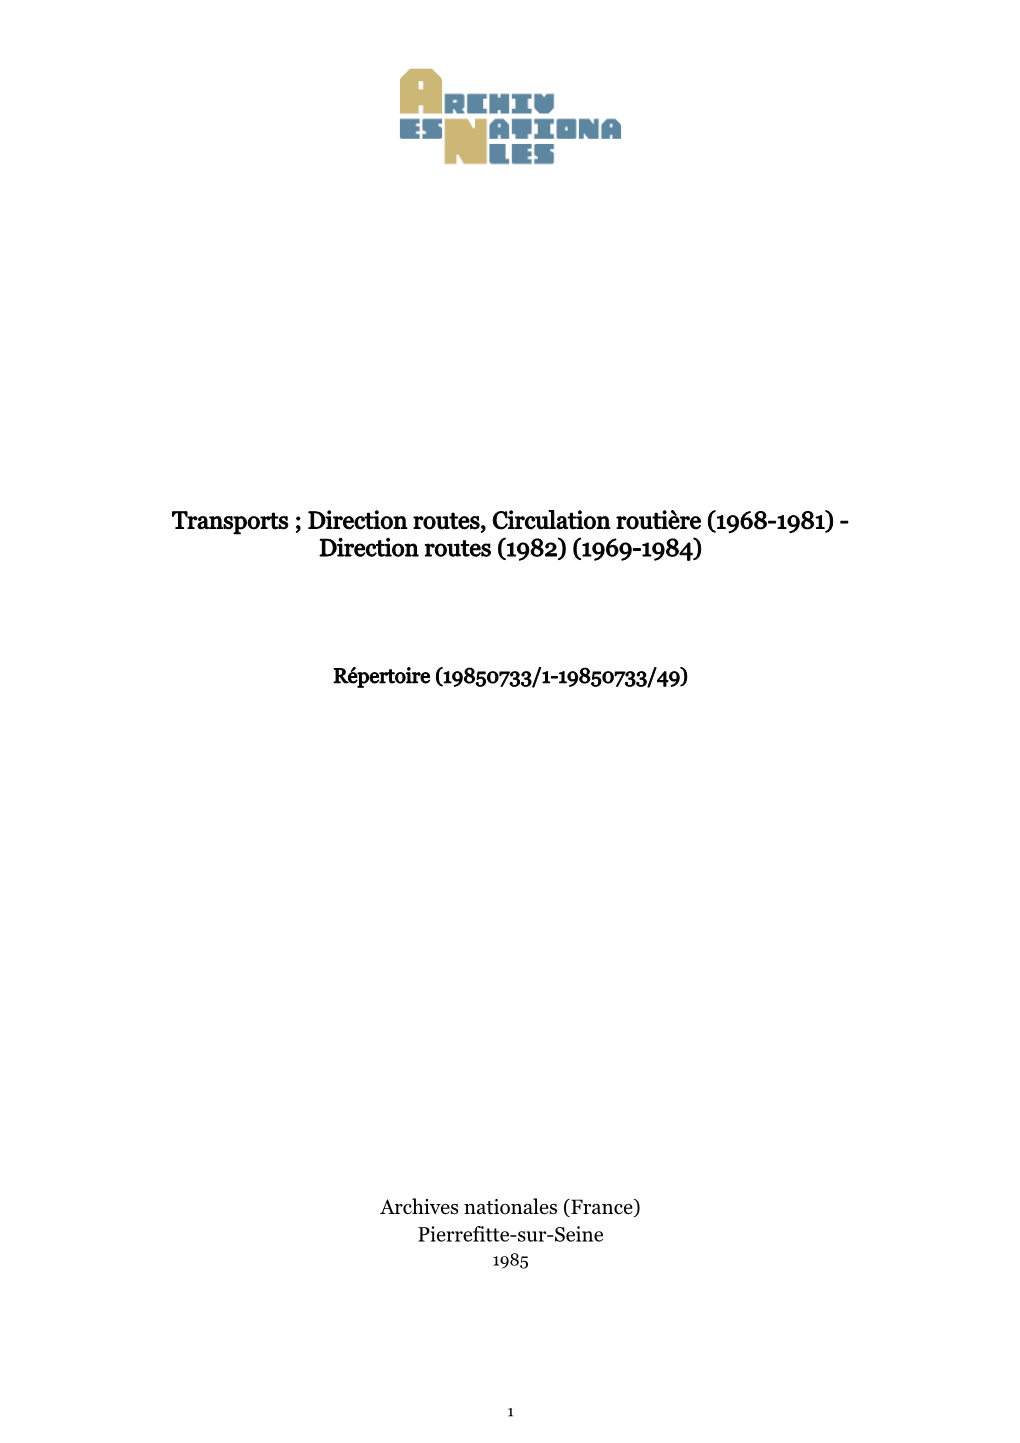 Transports ; Direction Routes, Circulation Routière (1968-1981) - Direction Routes (1982) (1969-1984)